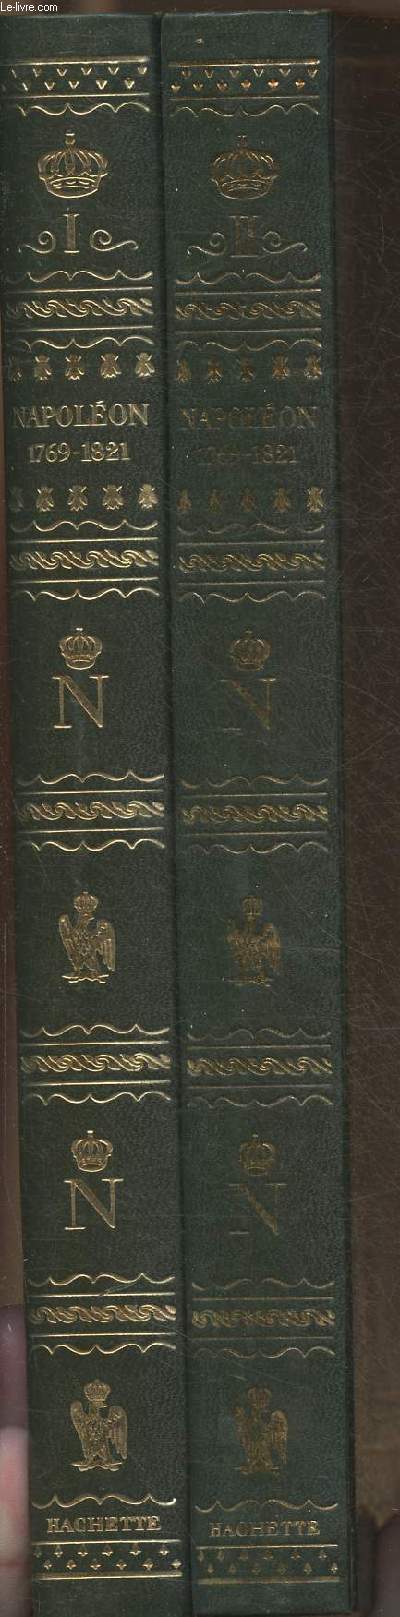 Napolon et l'Empire Tomes I et II (2 volumes) 1769-1815-1821